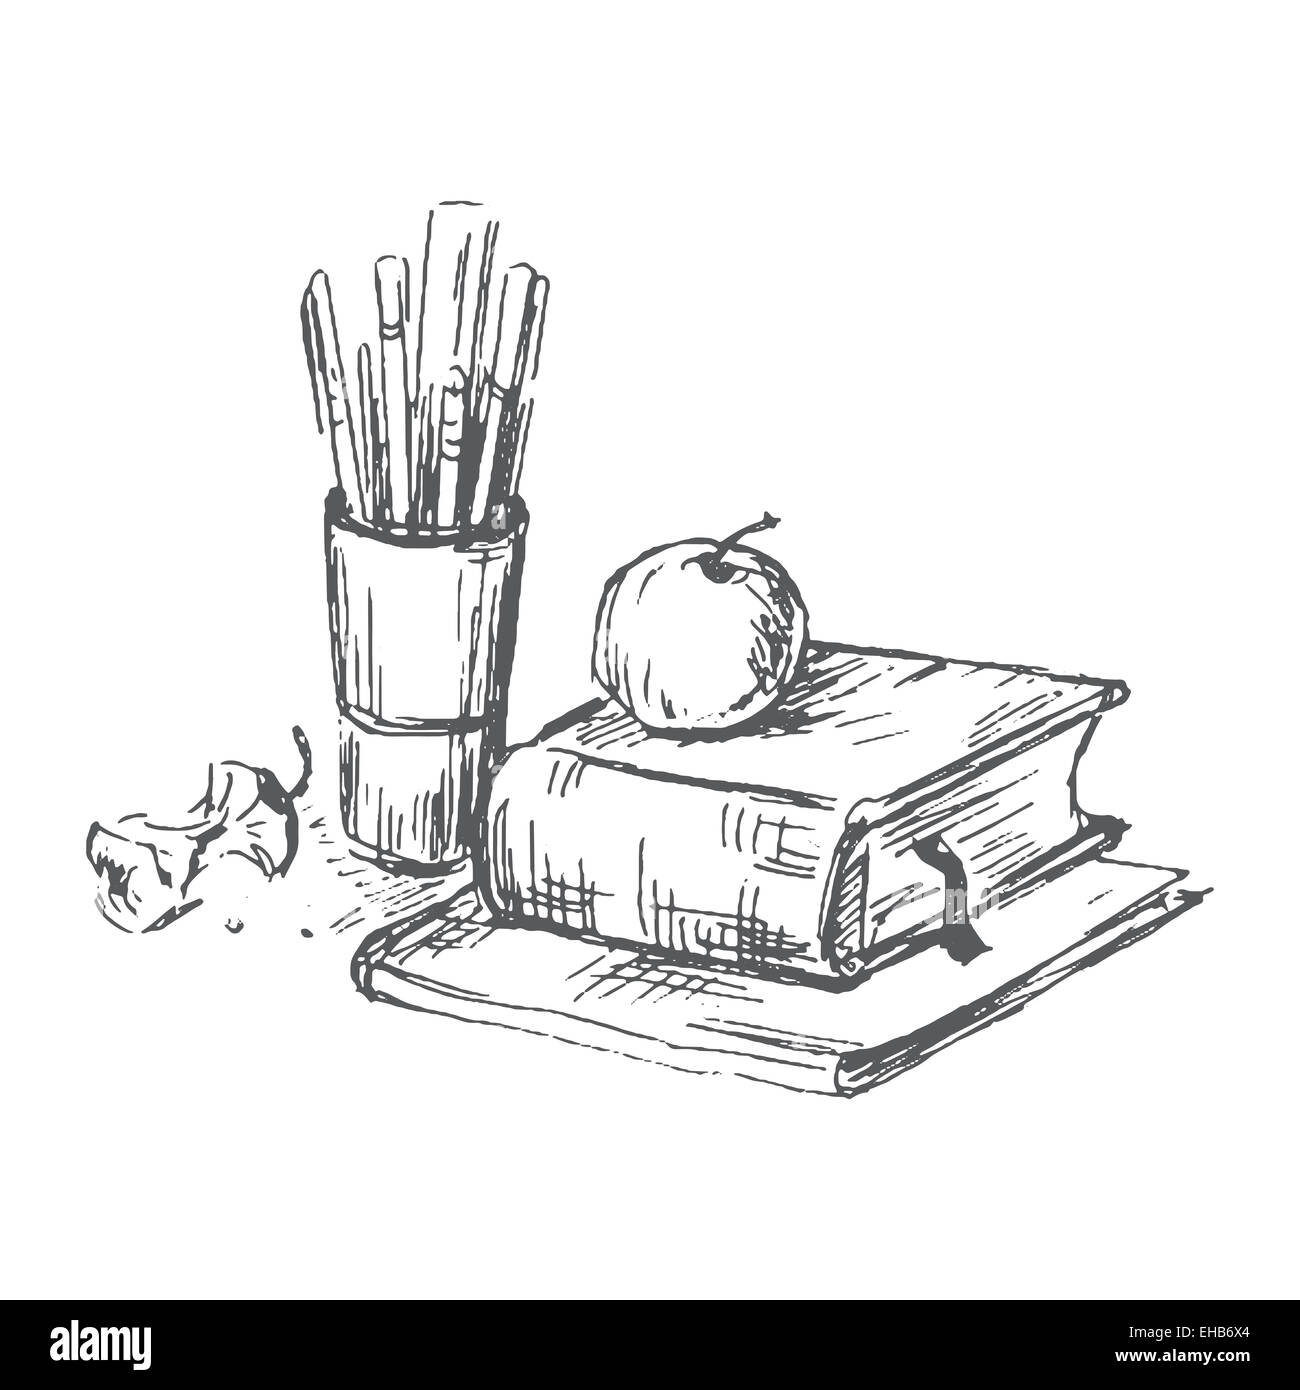 Sketch Pen Ink Vintage Garlic Set Stock Vector Royalty Free 1181282788   Shutterstock